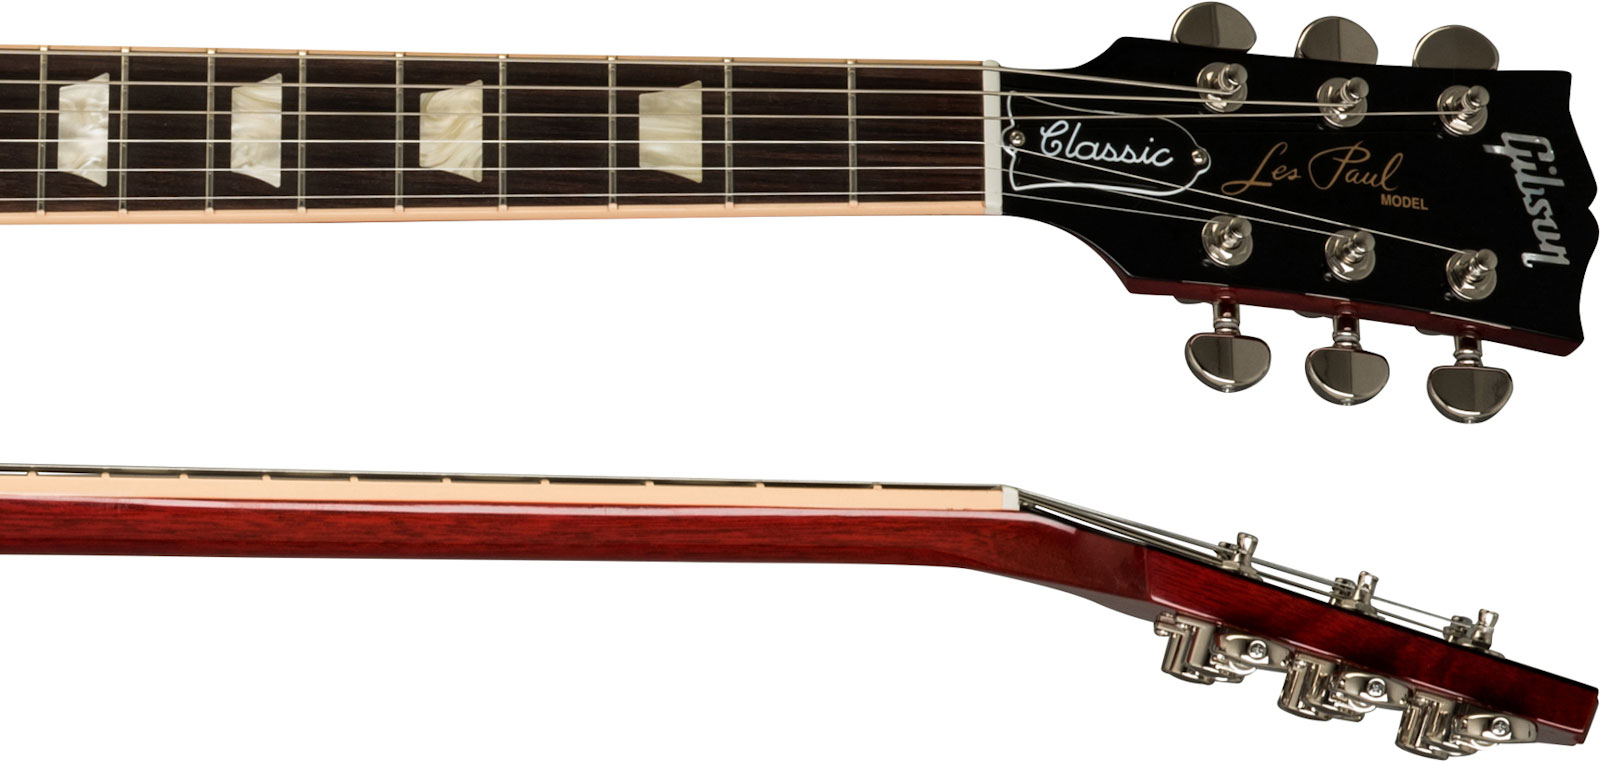 Gibson Les Paul Classic Modern 2019 2h Ht Rw - Heritage Cherry Sunburst - Enkel gesneden elektrische gitaar - Variation 3